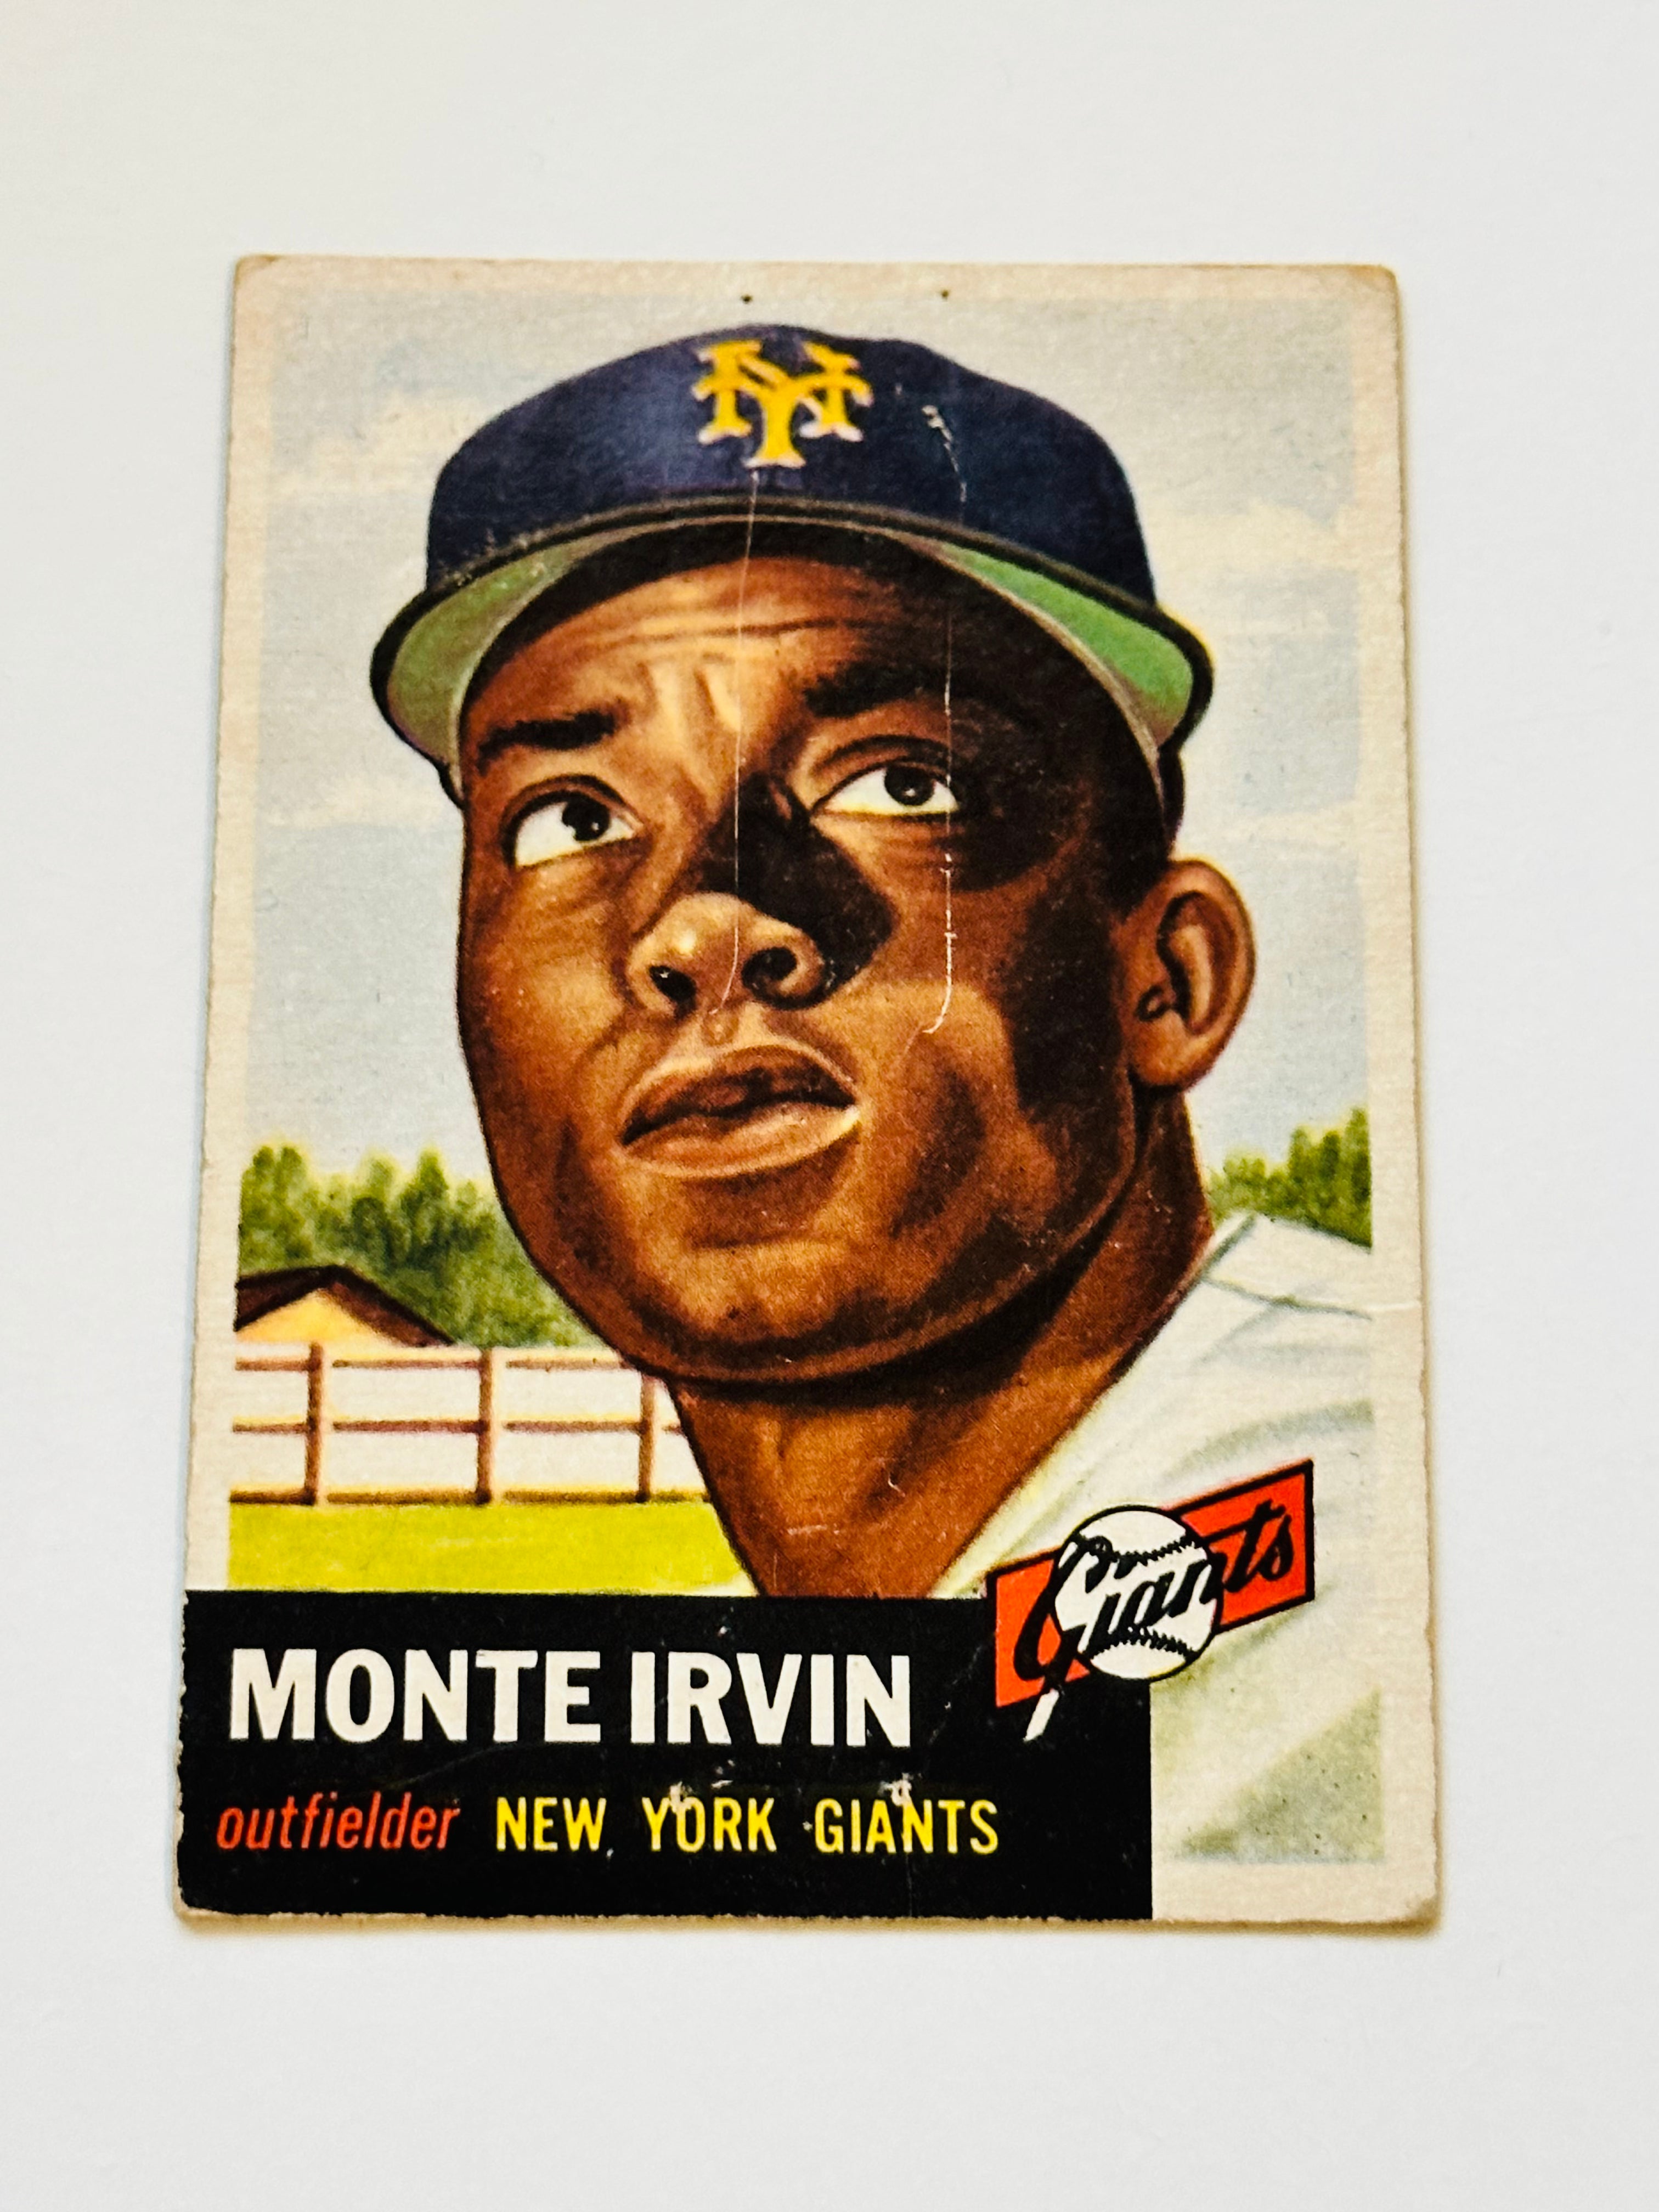 1953 Topps Monte Irvin vg condition baseball card